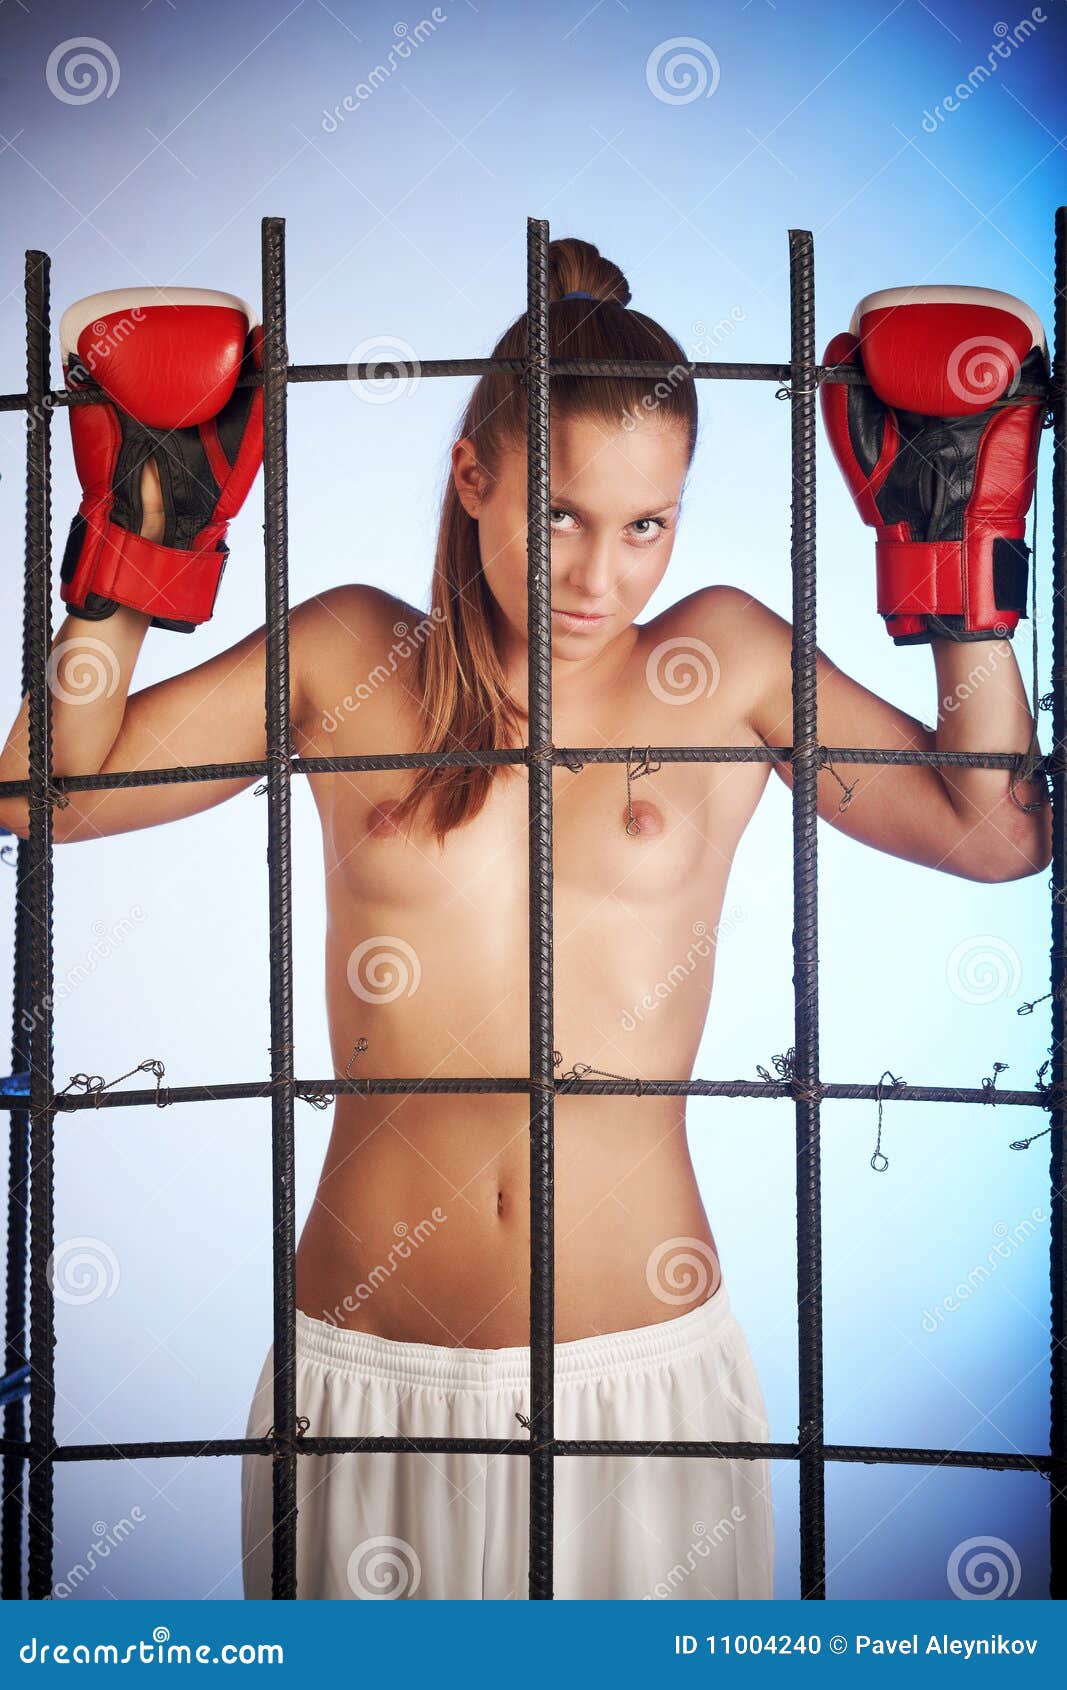 anna boyd ellington add naked female fighters photo